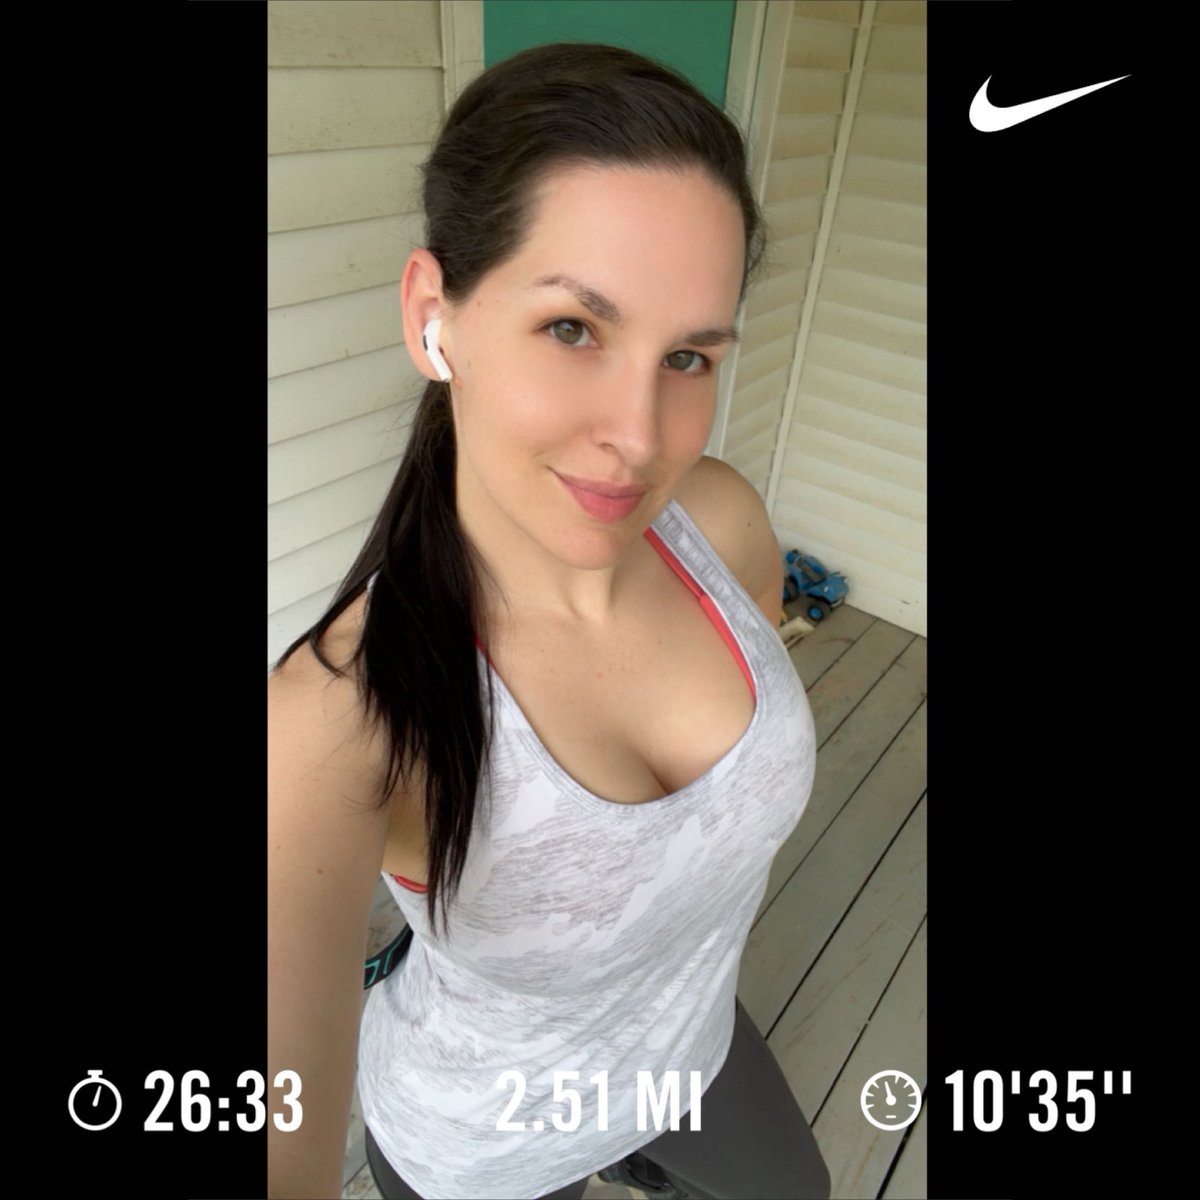 Ran 2.51 miles with Nike⁠ Run Club
I’ll take any improvements!!
#running #runningismytherapy #nikerunning